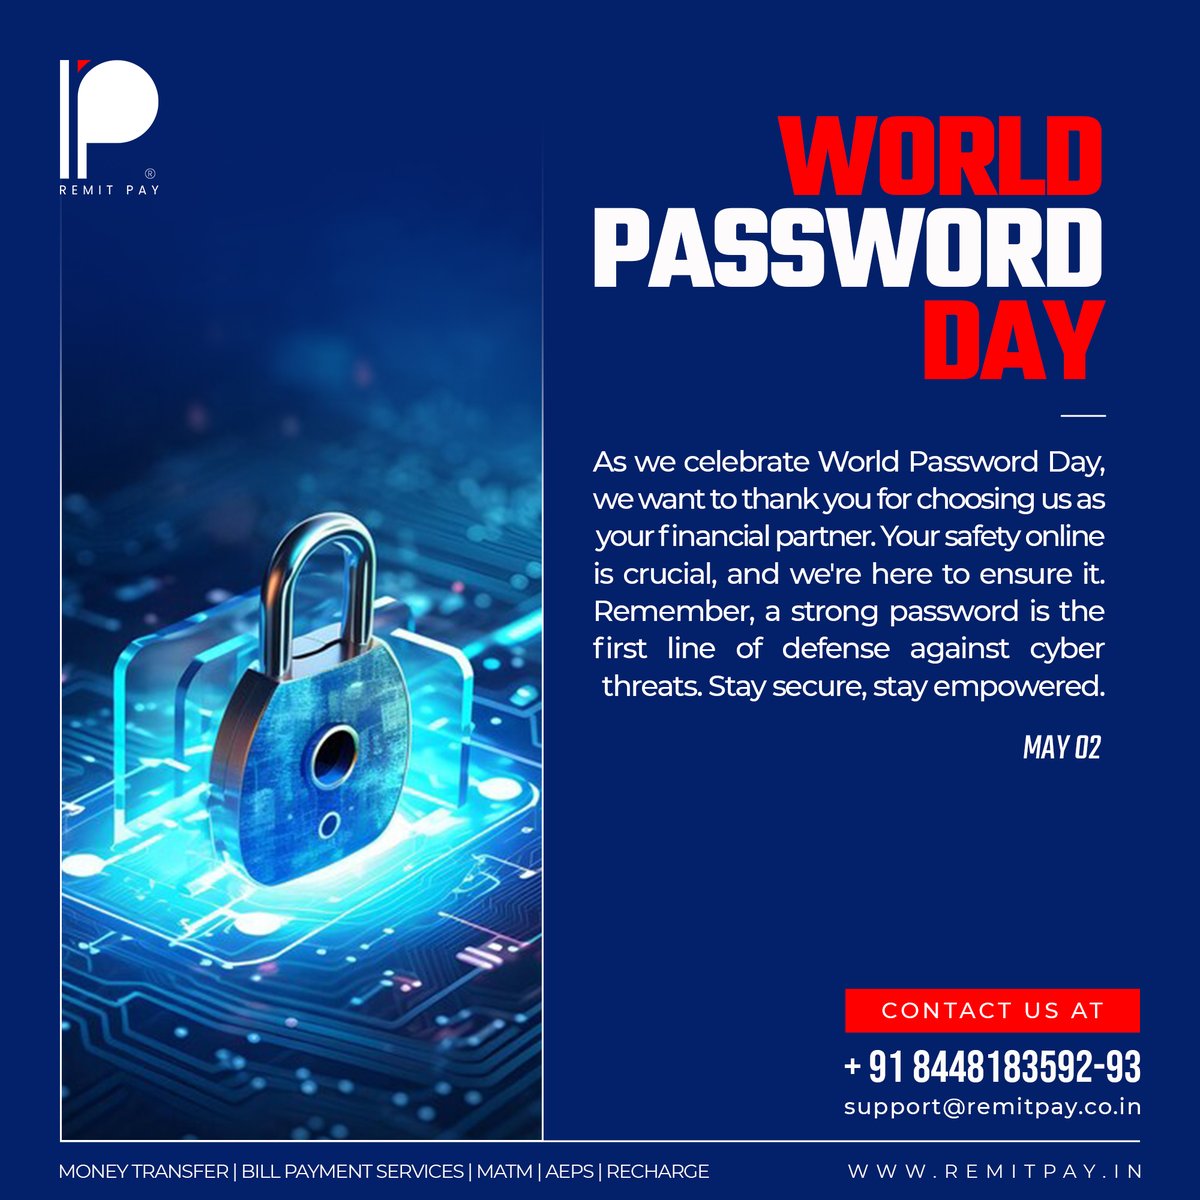 World Password Day

#financialservice #financialservices #fintech #fintechs #fintechstartup #fintechsolutions #fintechrevolution #password #passwords #passwordday #worldpasswordday #security #safety #safetytips #passwordsecurity